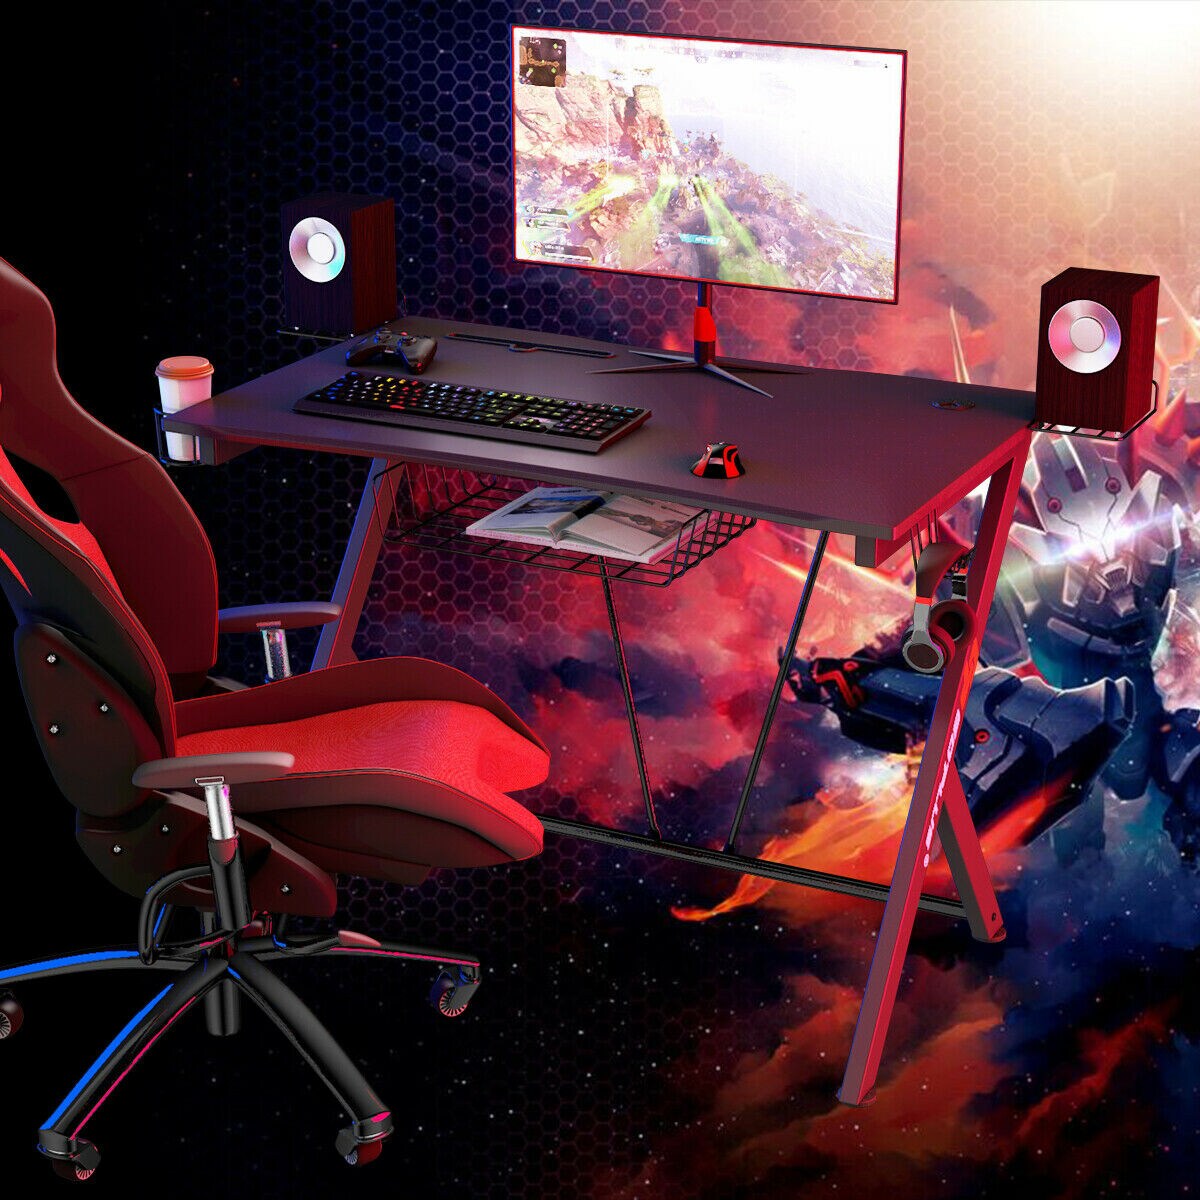 Goplus 29.5-in Black Modern/Contemporary Gaming Desk in the Desks